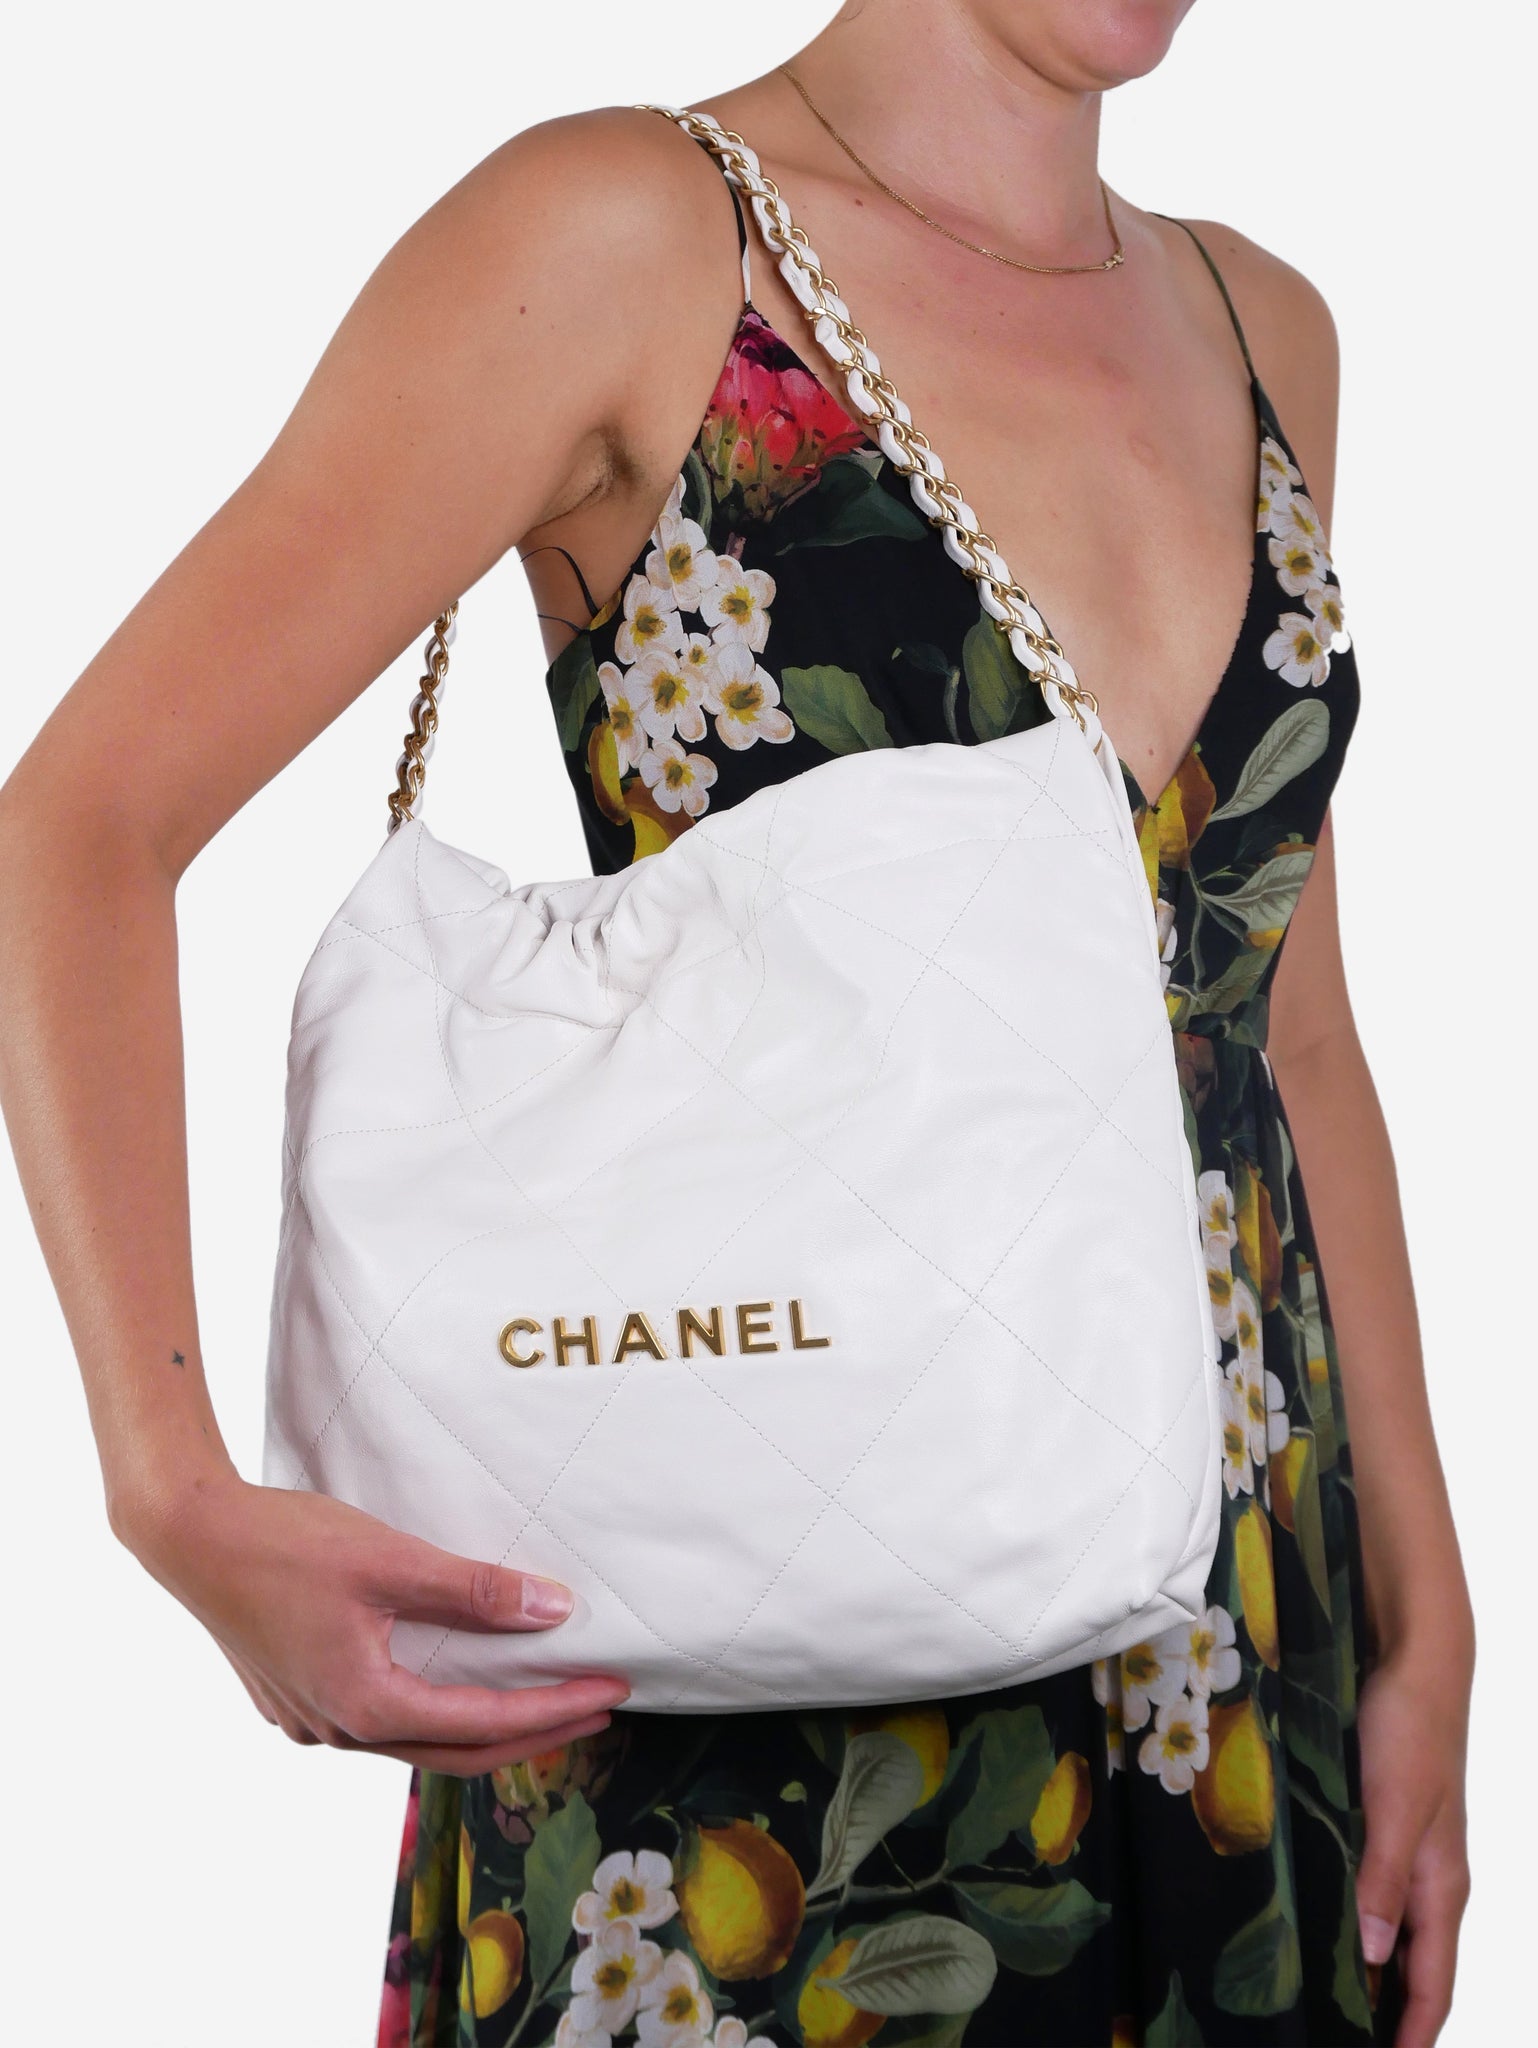 White pre-owned Chanel 22 handbag